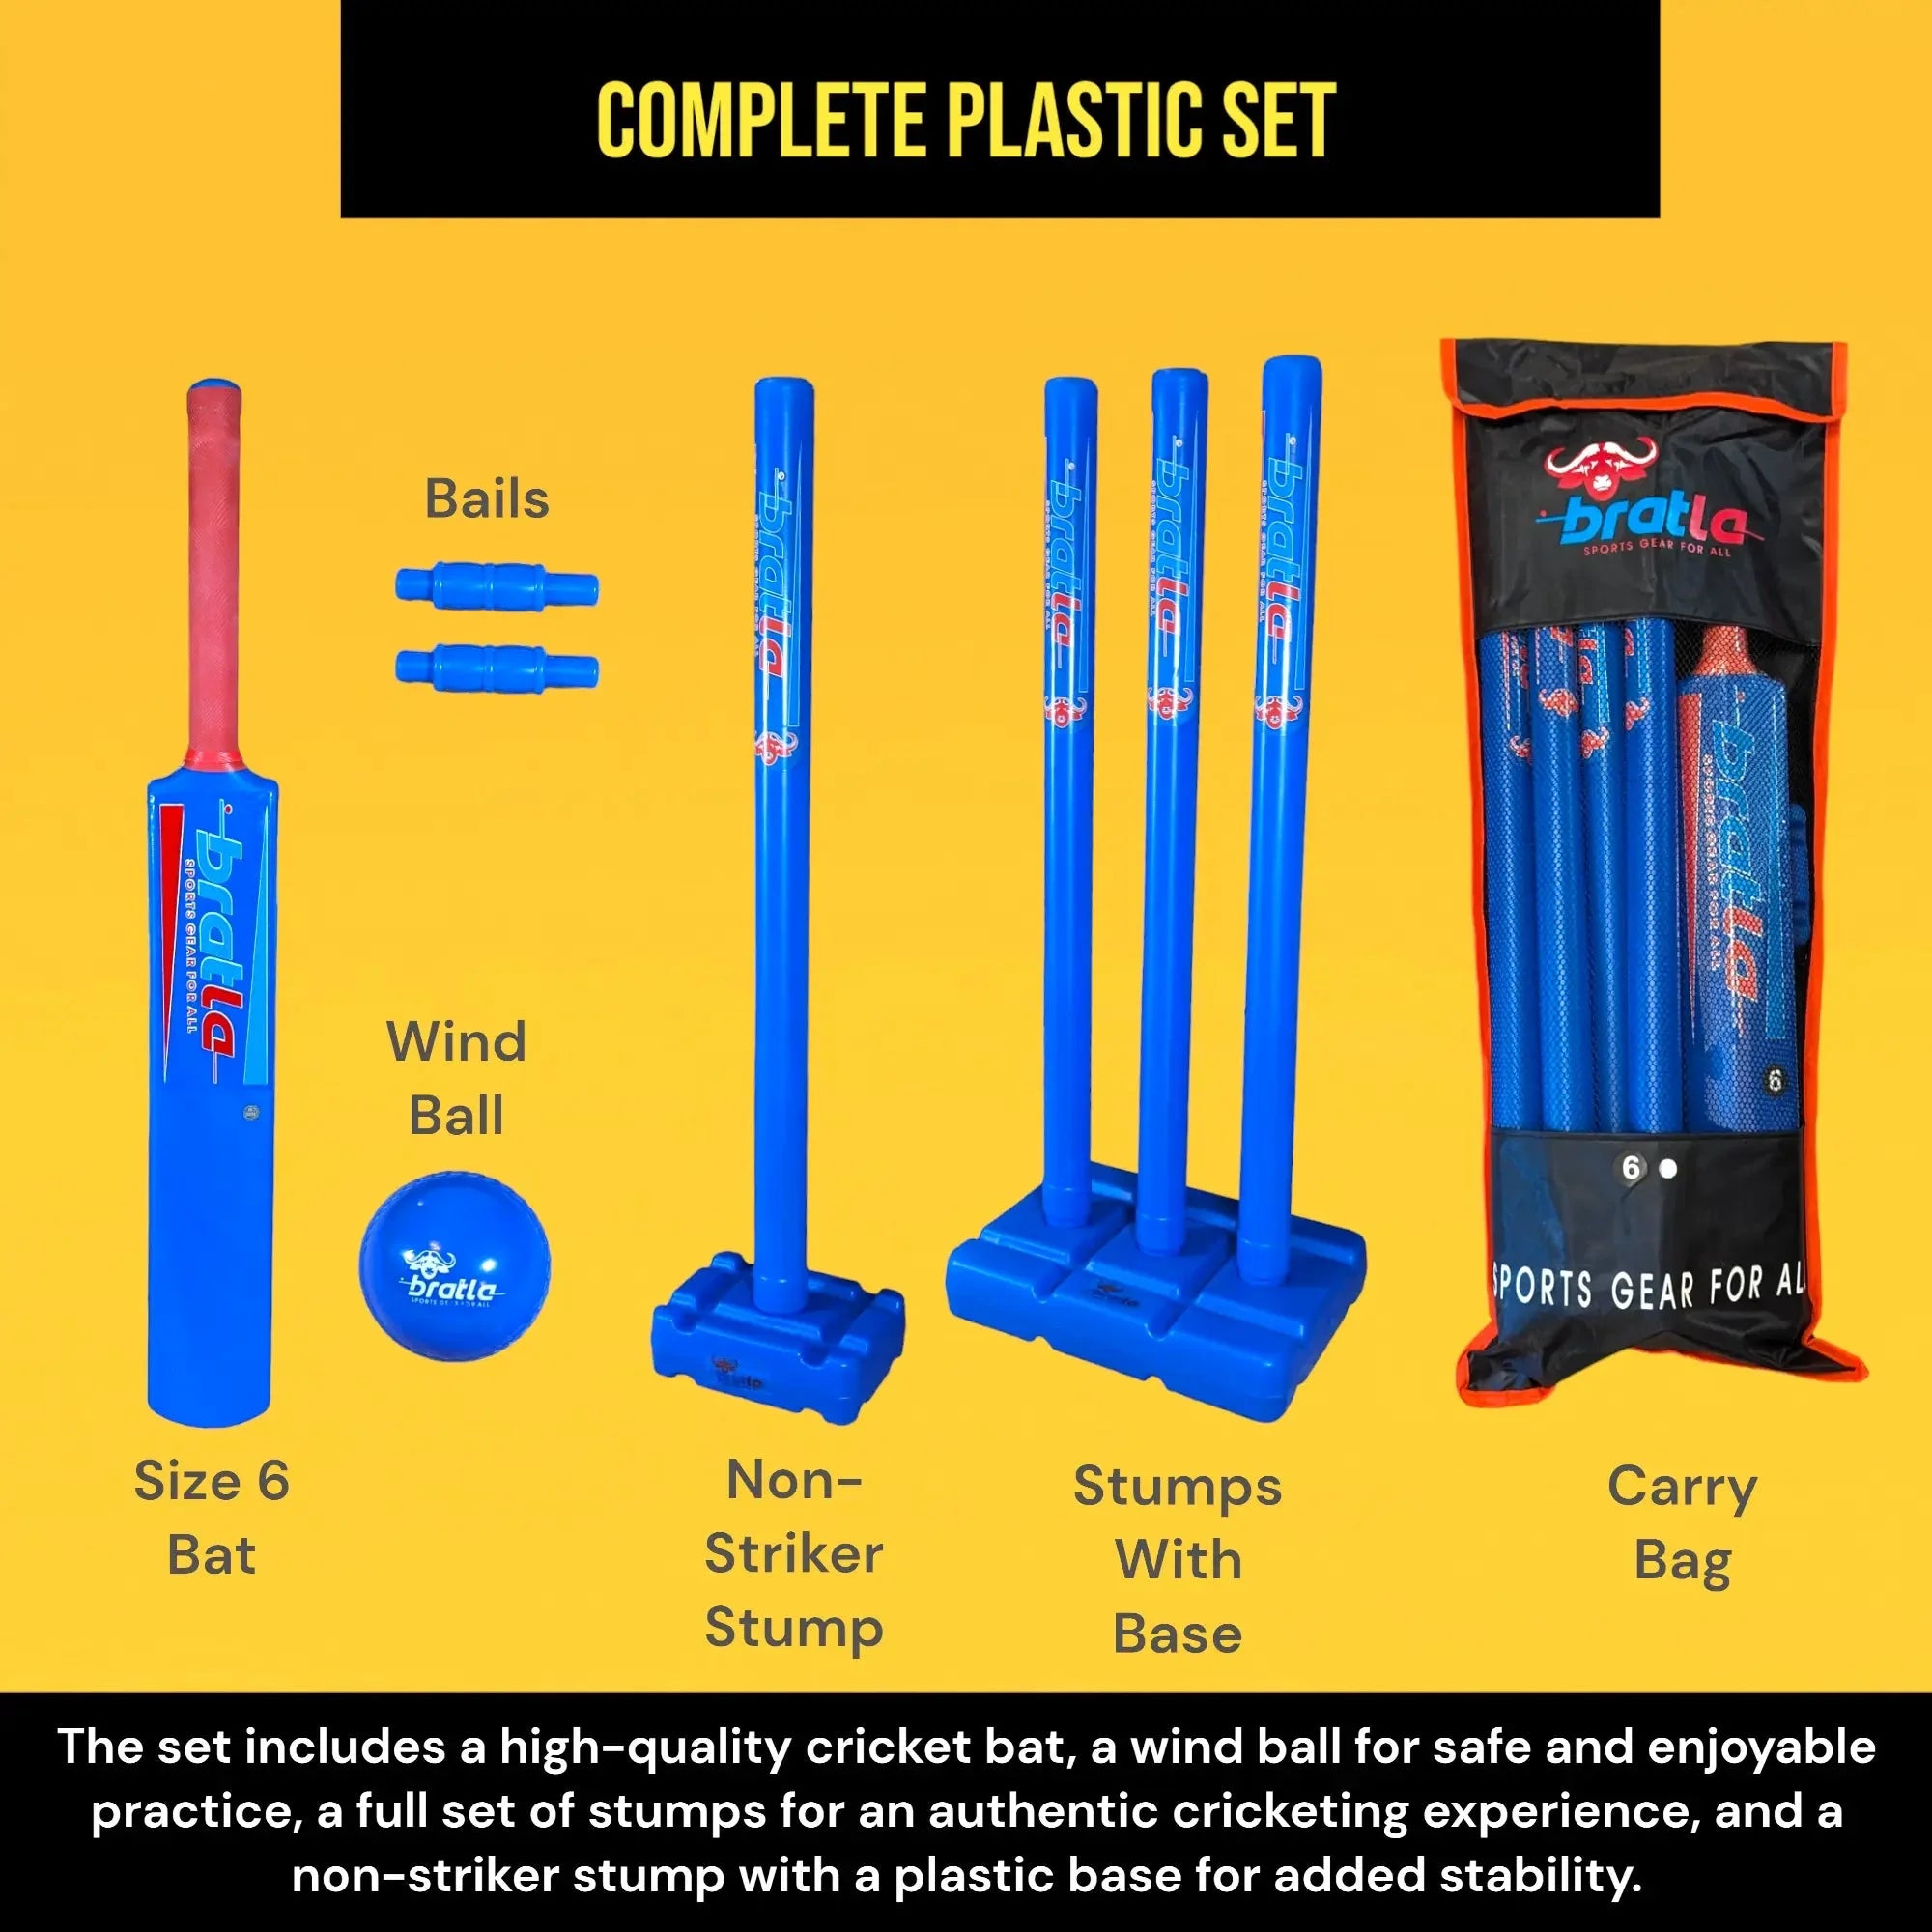 Bratla Cricket Set Size 6 - Blue Color | Includes Bat Wind Ball Stumps and Non-Striker Stump with Plastic Base - BATS - CRICKET SETS